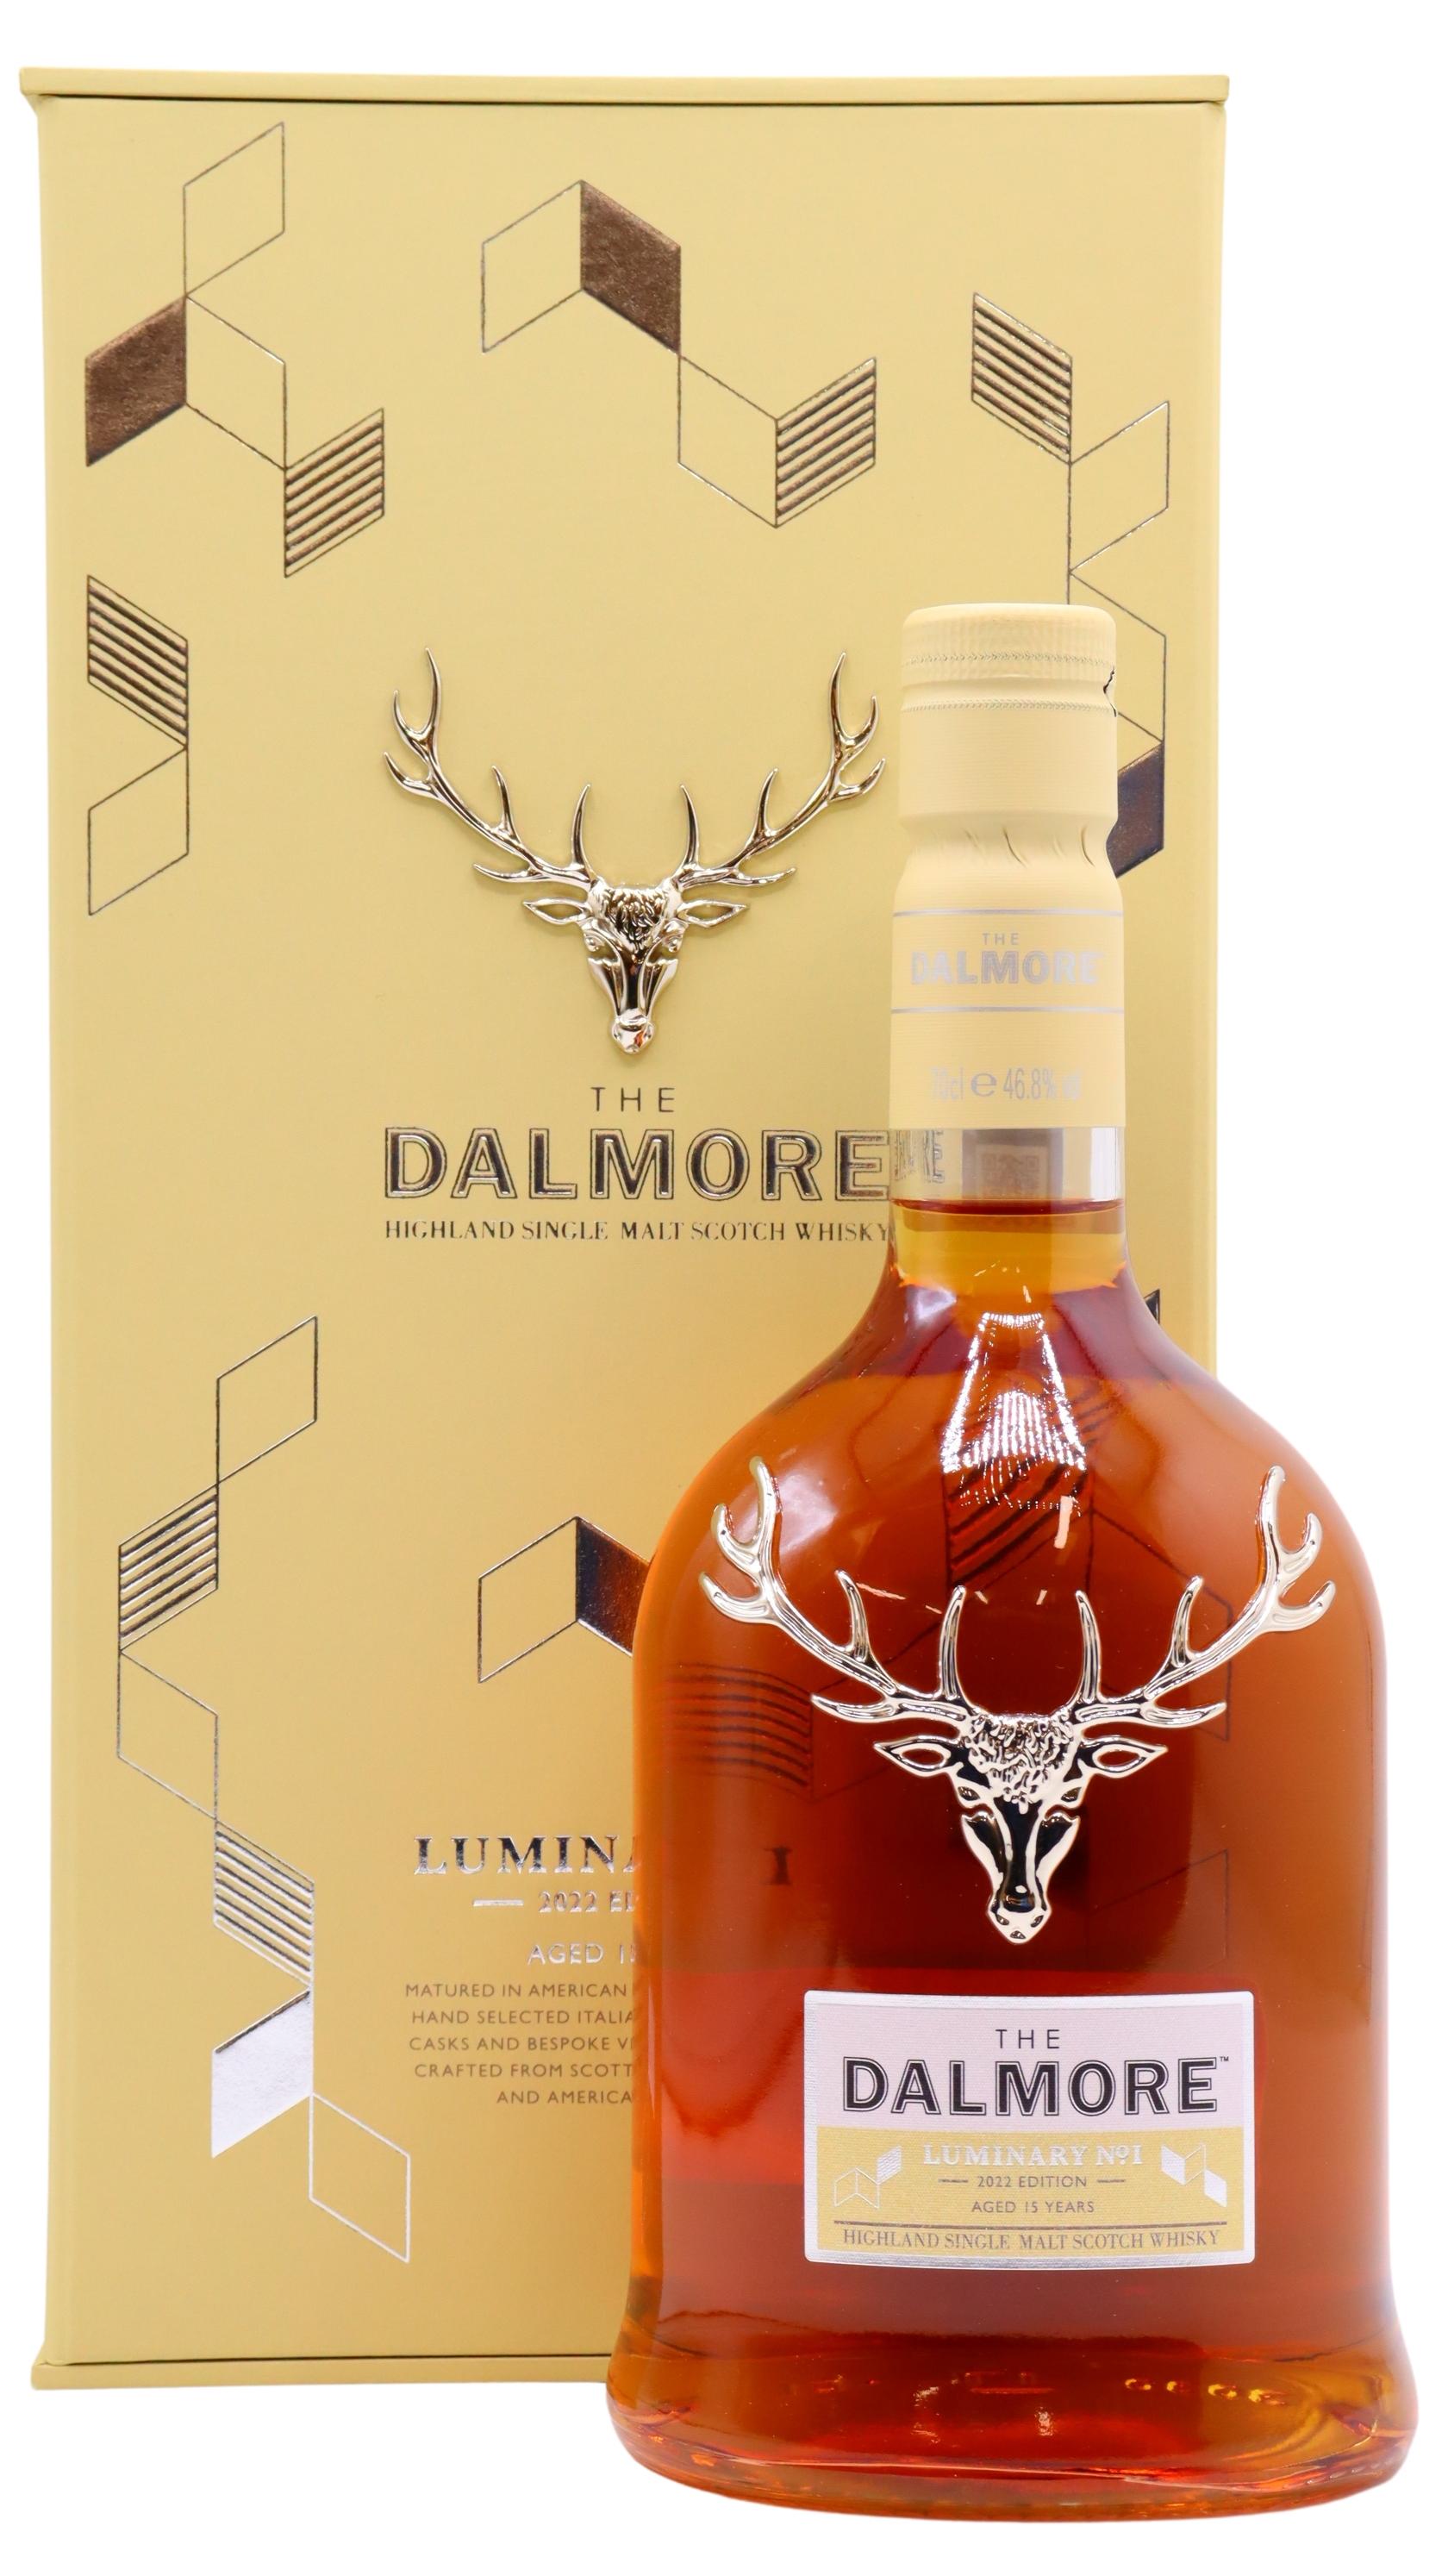 The Dalmore Single Malt Scotch Whiskey 15